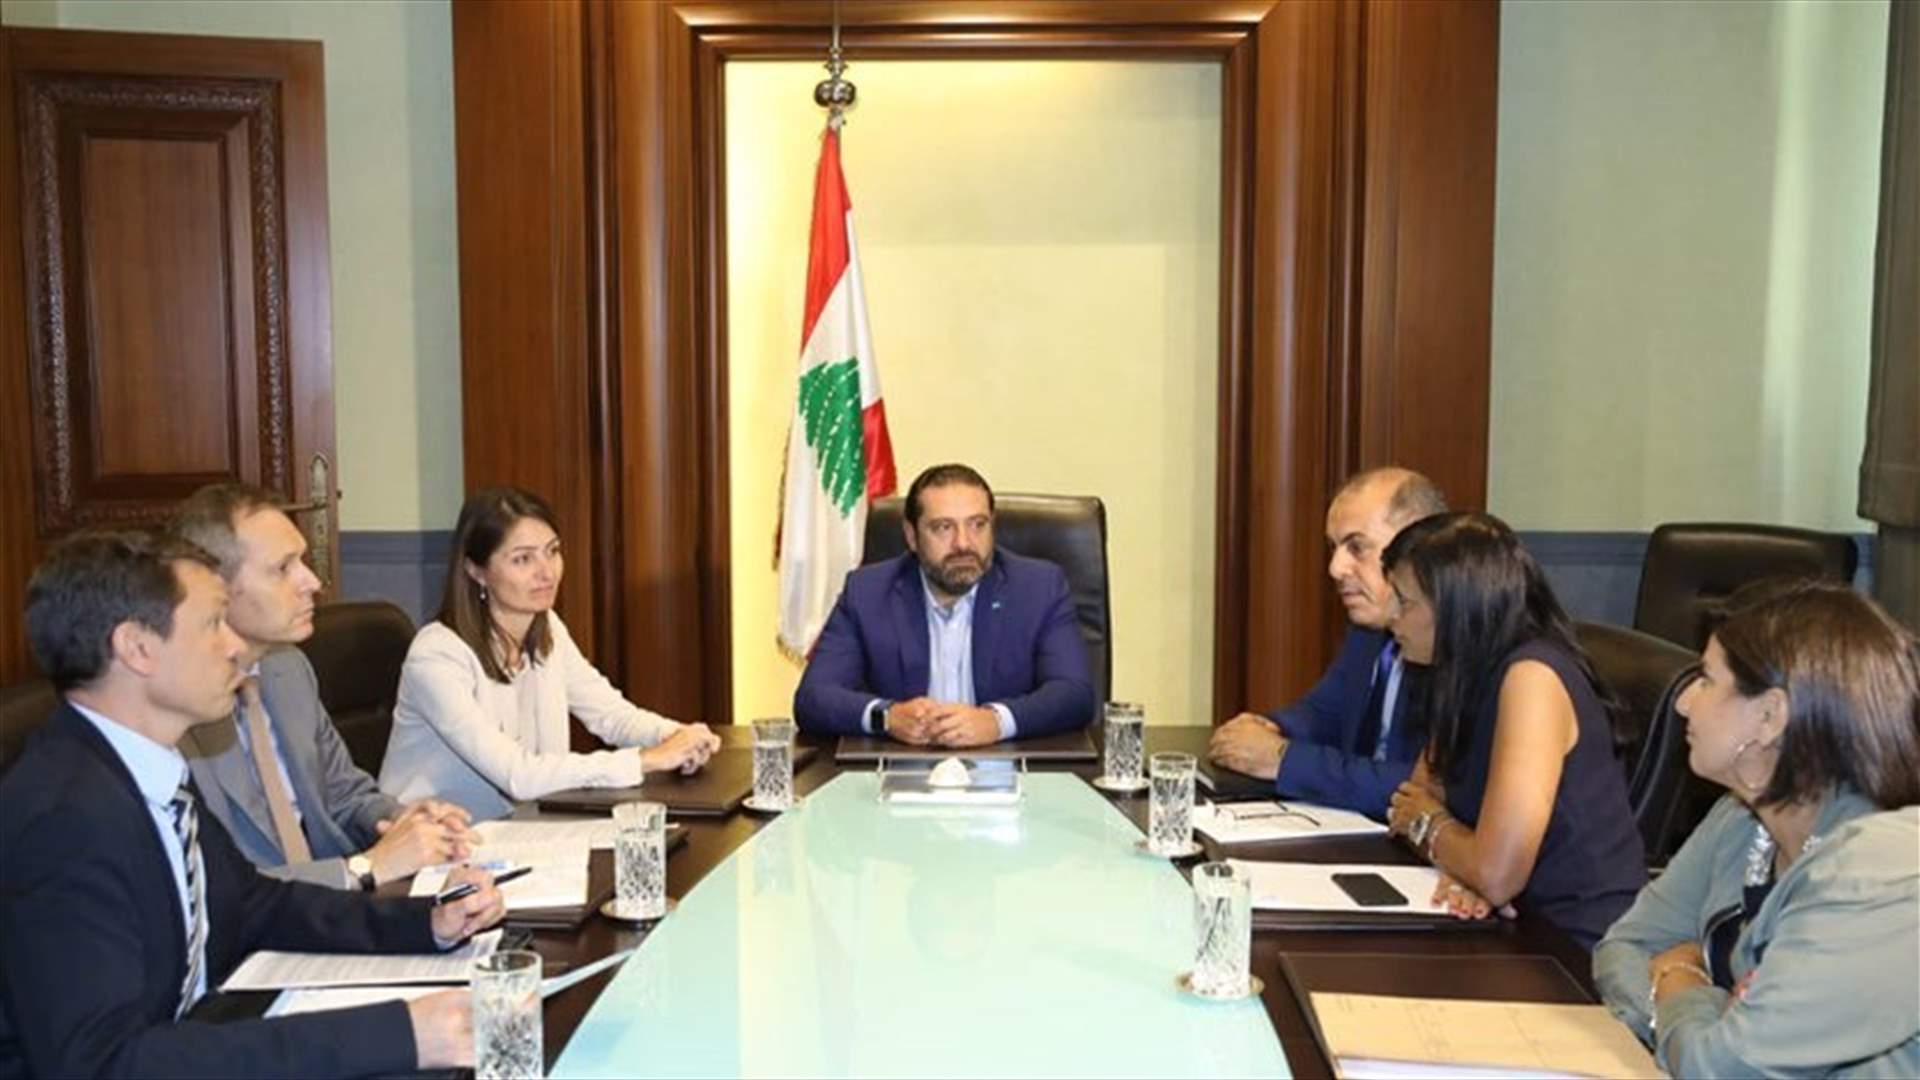 PM Hariri heads two meetings in the presence of EU Ambassador Lassen